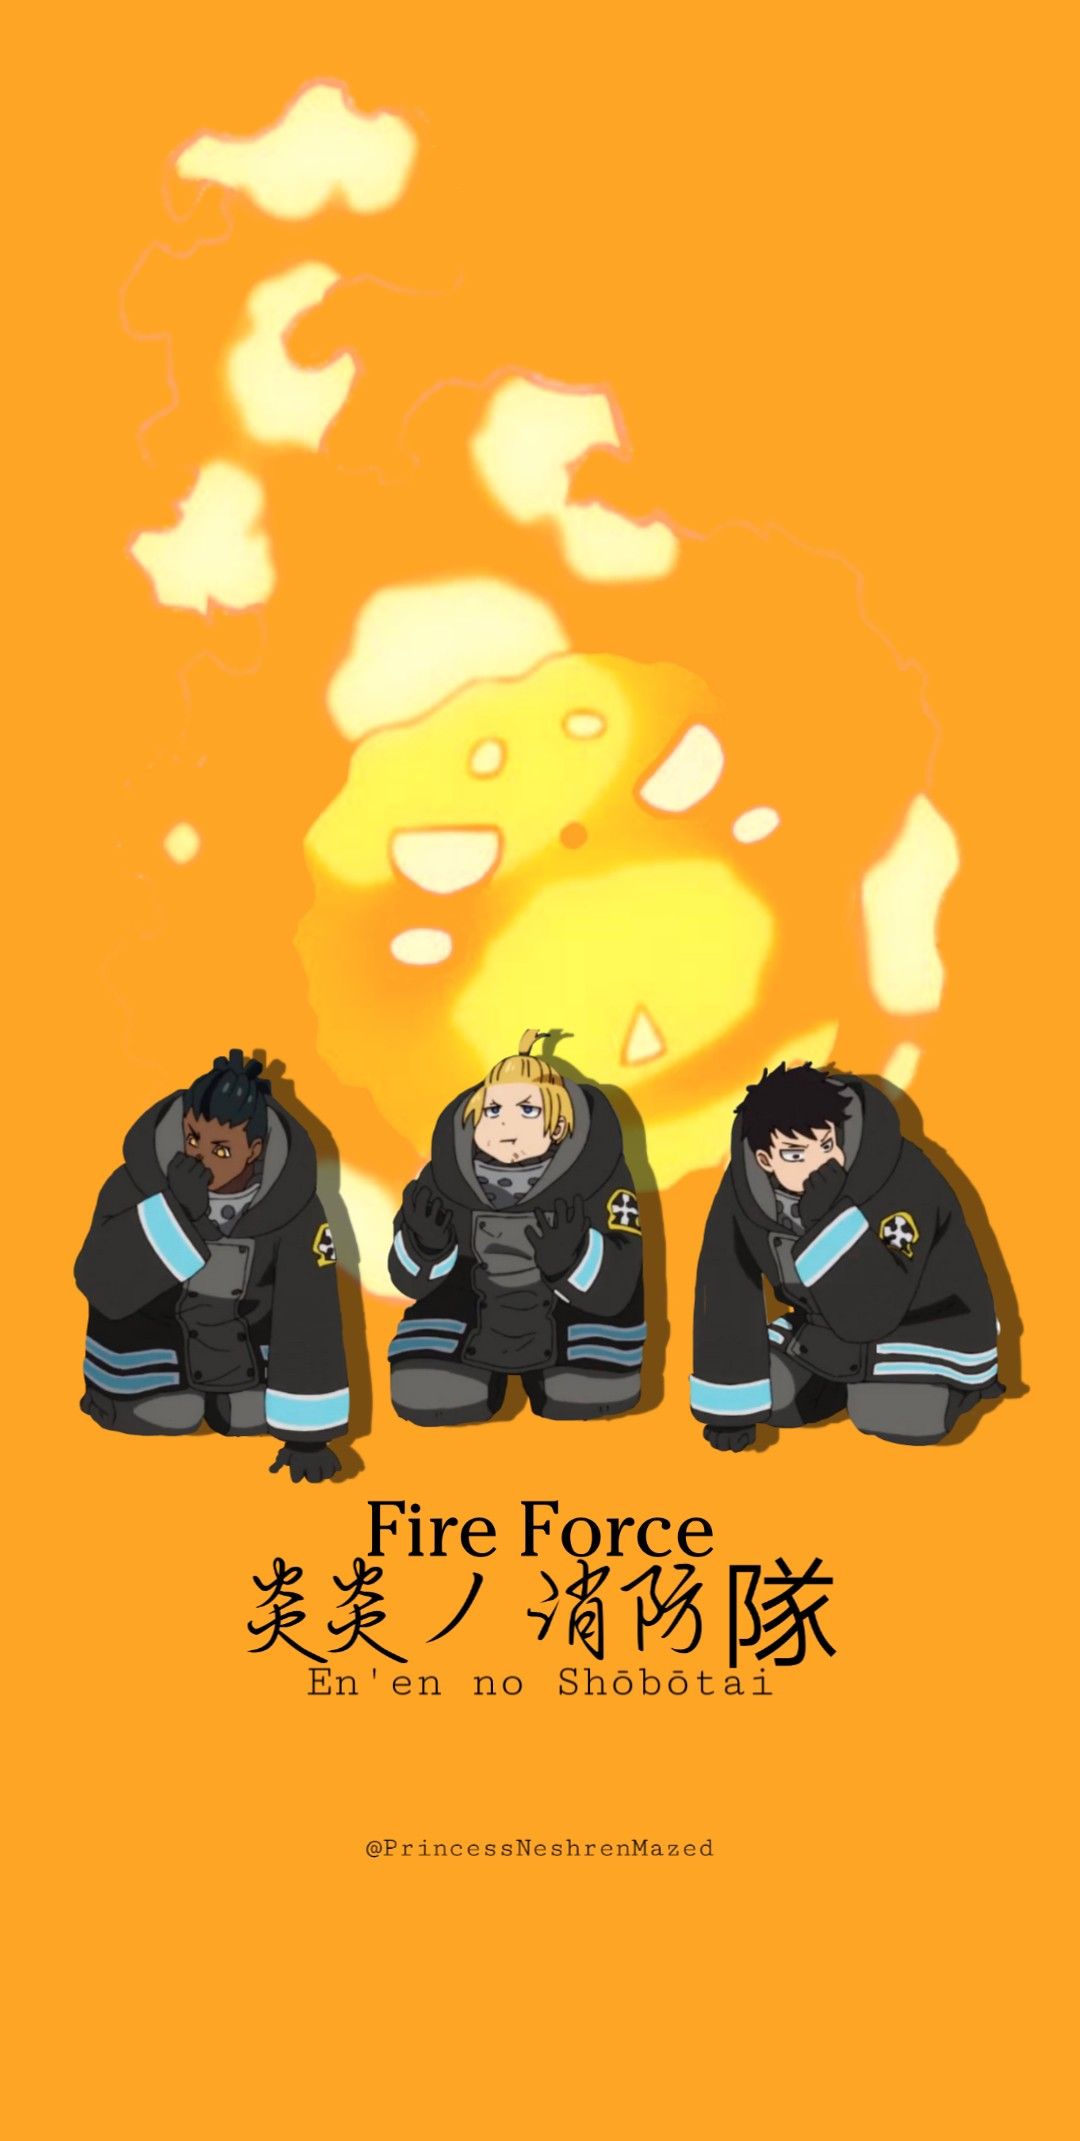 Fire Force wallpaper. Anime wallpaper, Anime classroom, Anime wallpaper phone